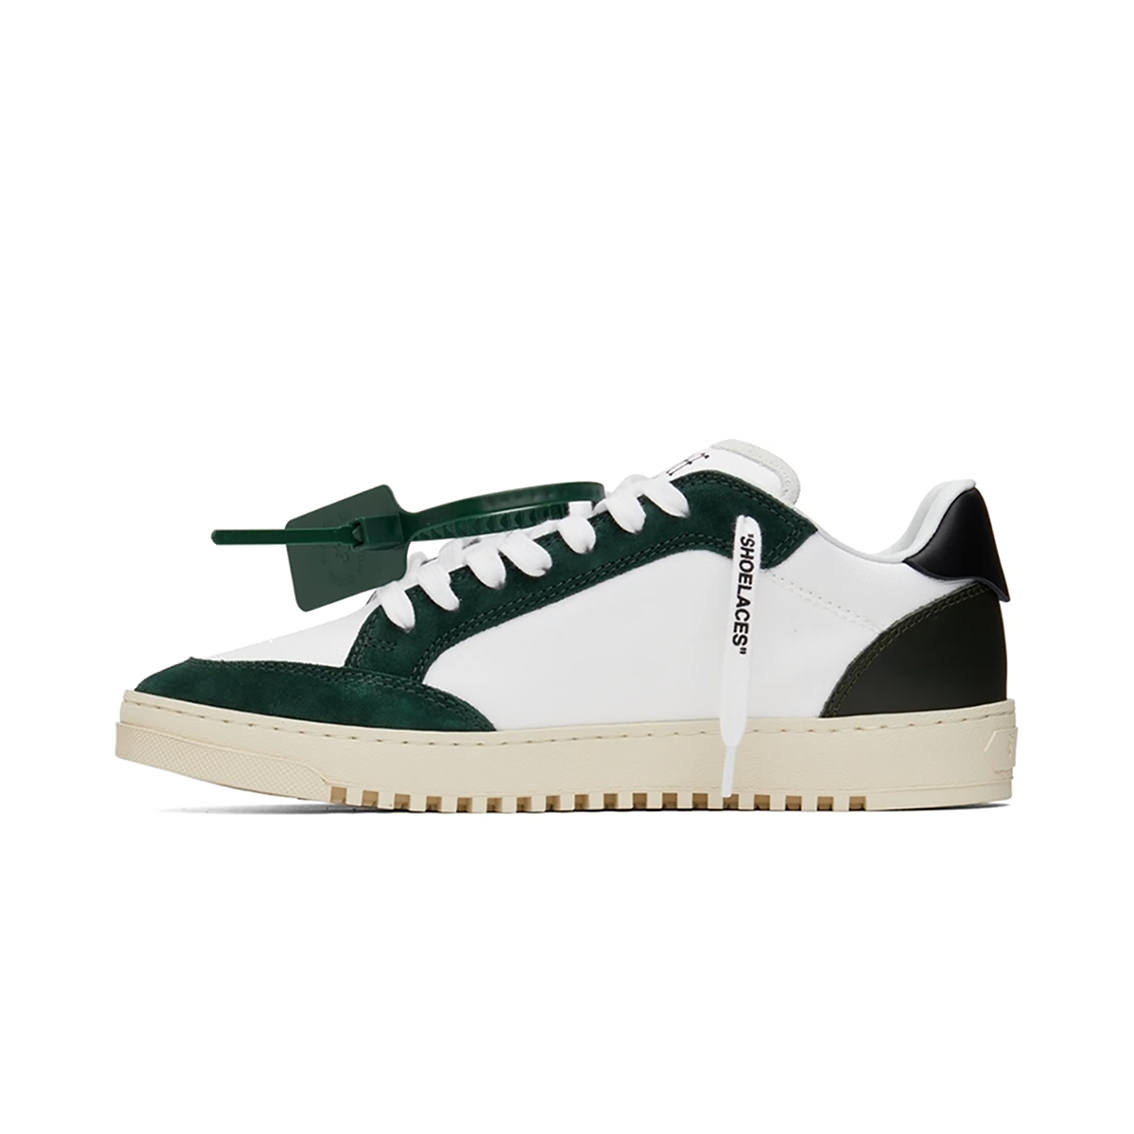 White & Green 5.0 SneakersWhite & Green 5.0 Sneakers - OFour